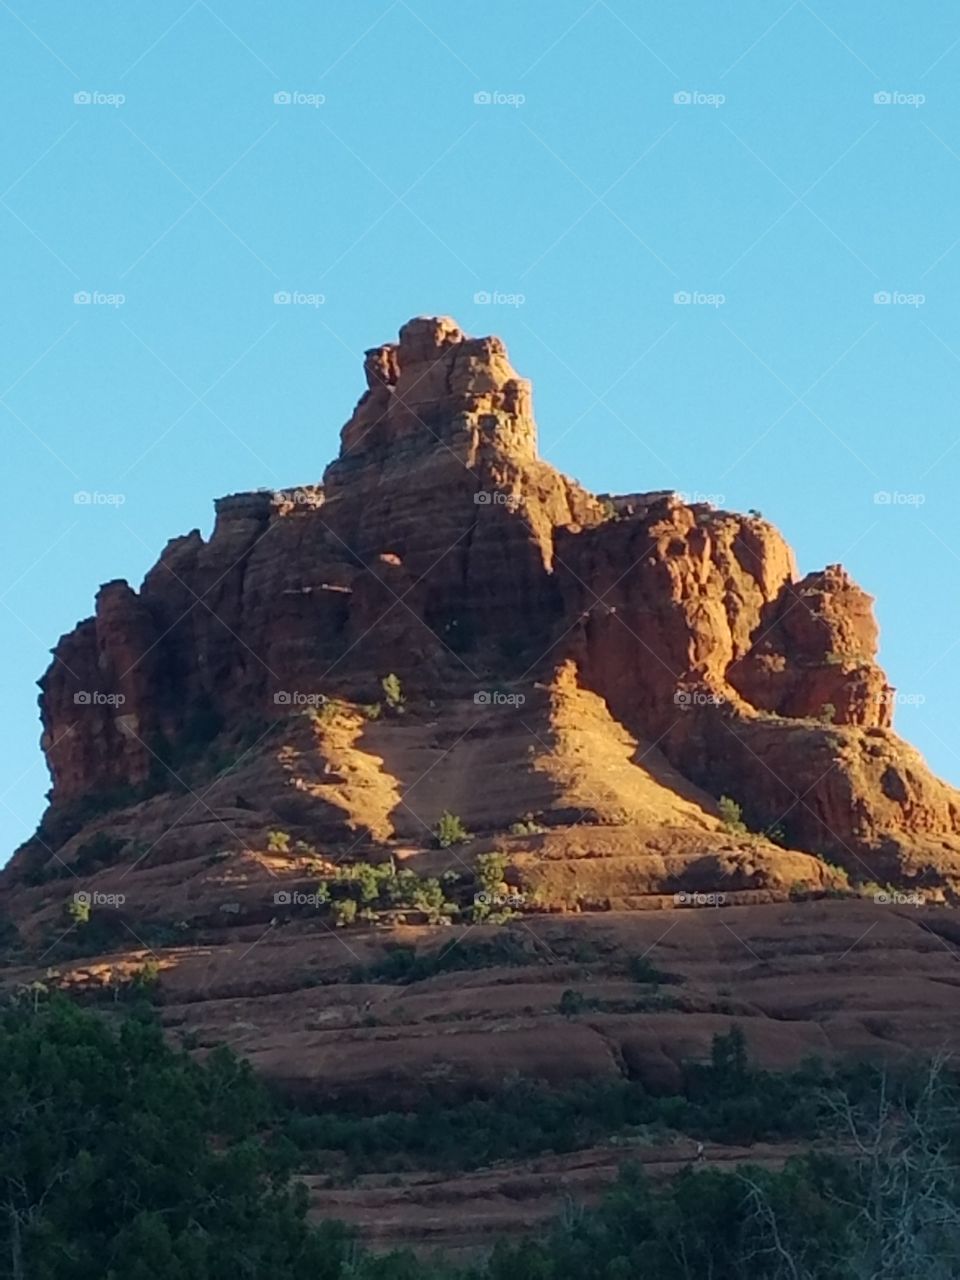 red rock desert mountain landscape